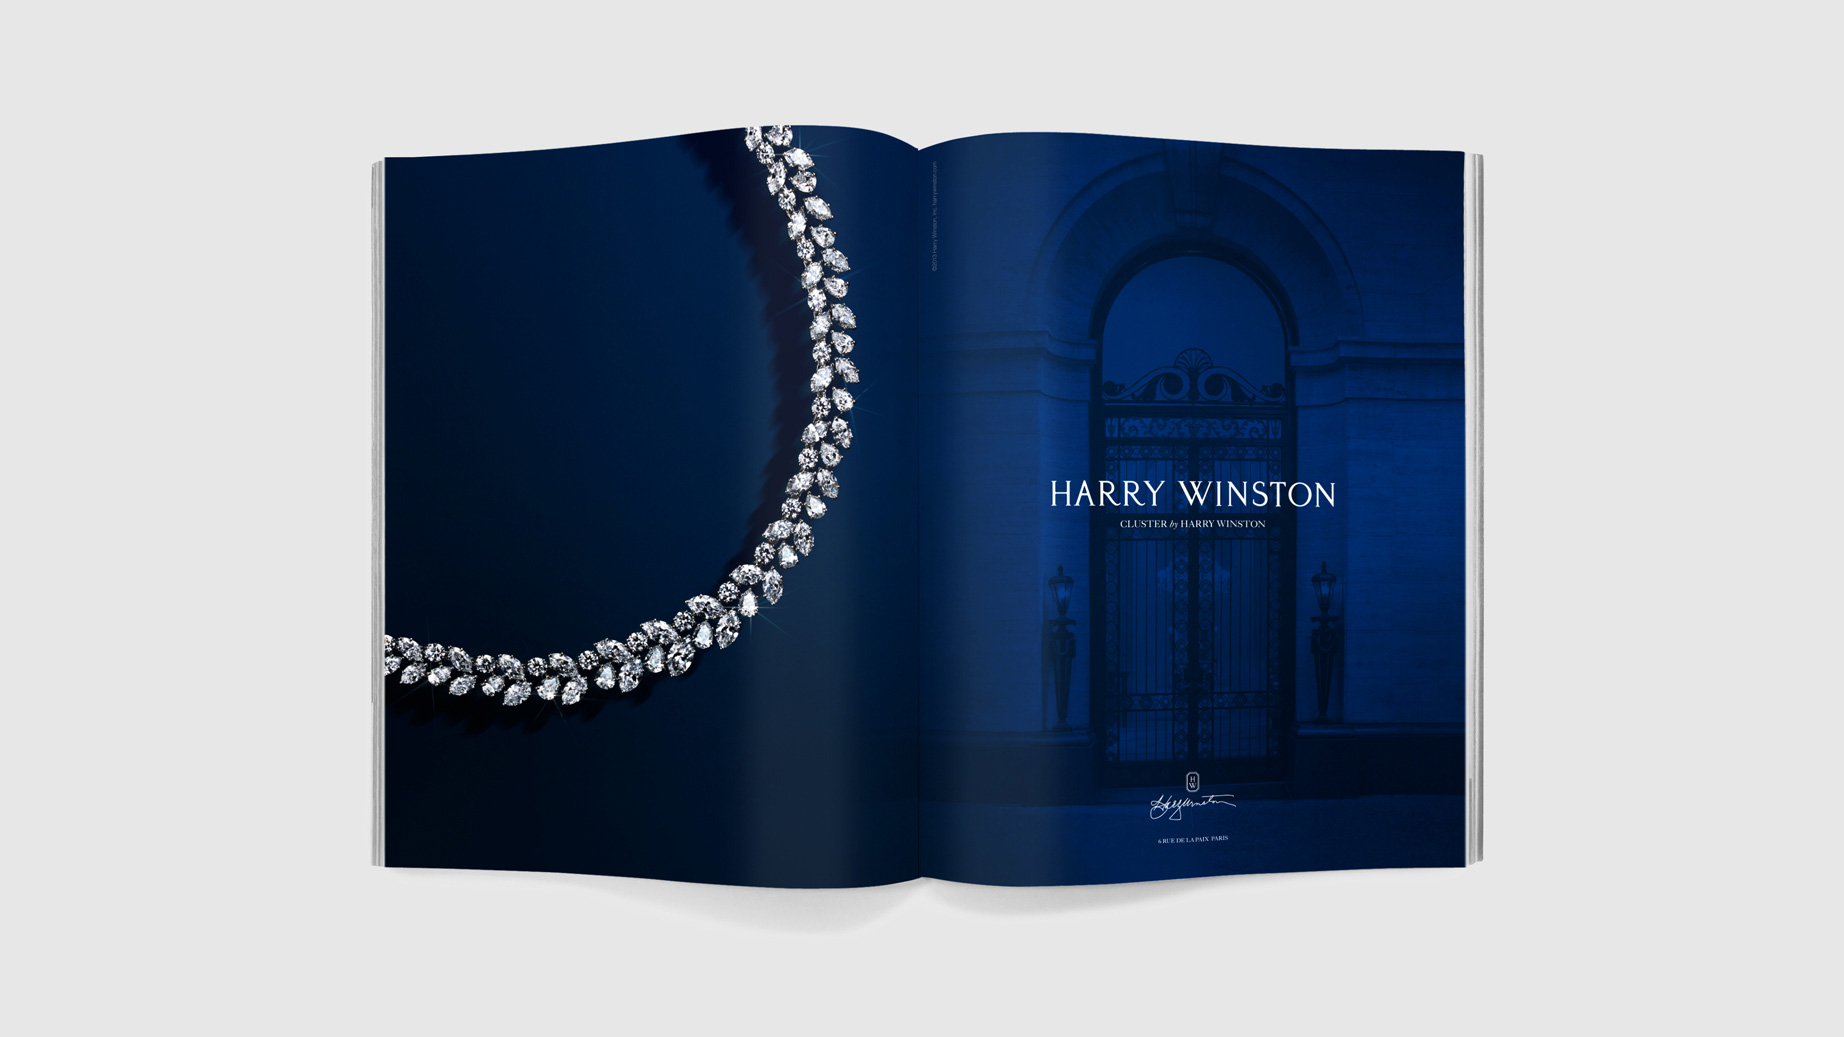 HARRY WINSTON high jewellery diamonds